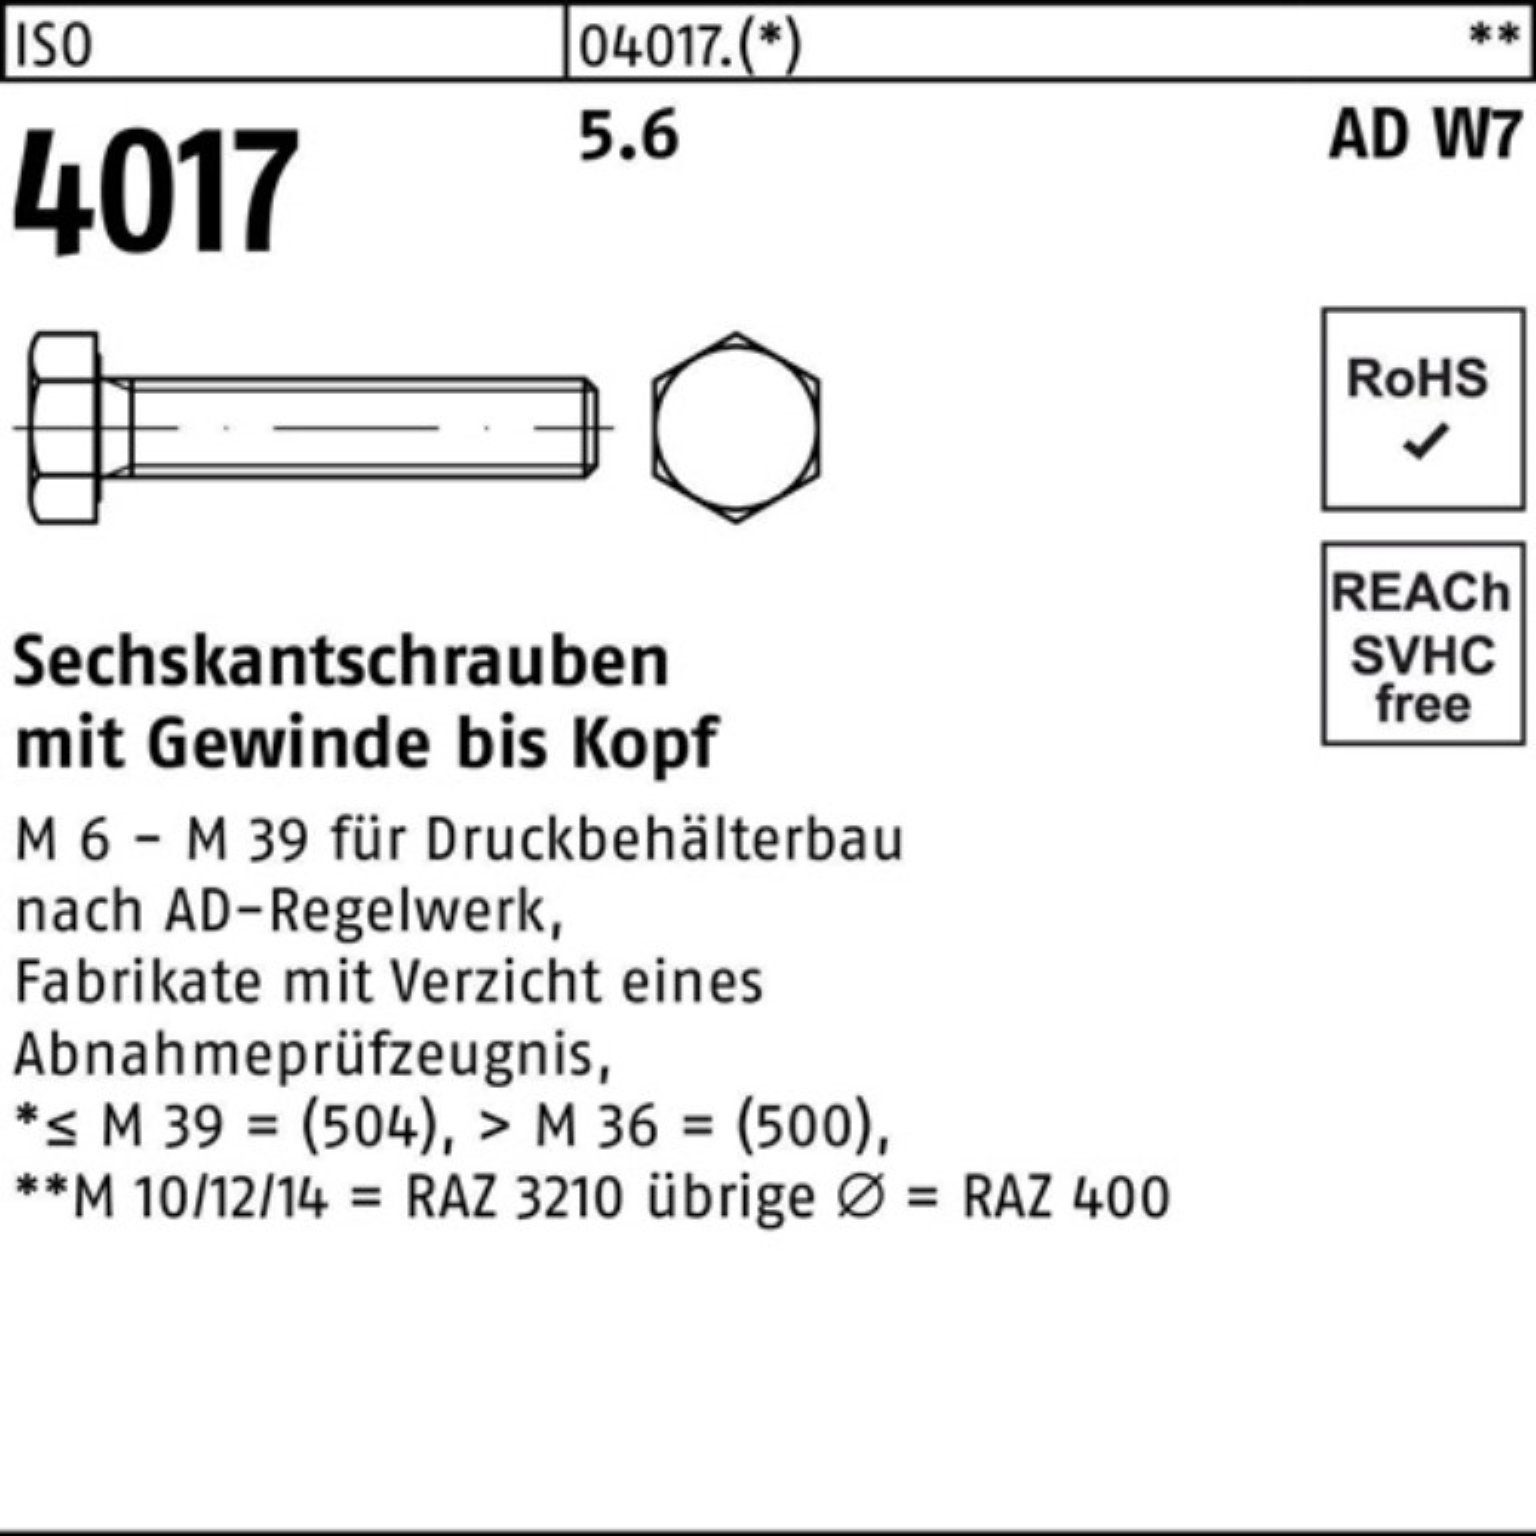 IS Sechskantschraube AD W7 VG Bufab 1 Stück 50 Sechskantschraube 5.6 ISO M36x 4017 100er Pack